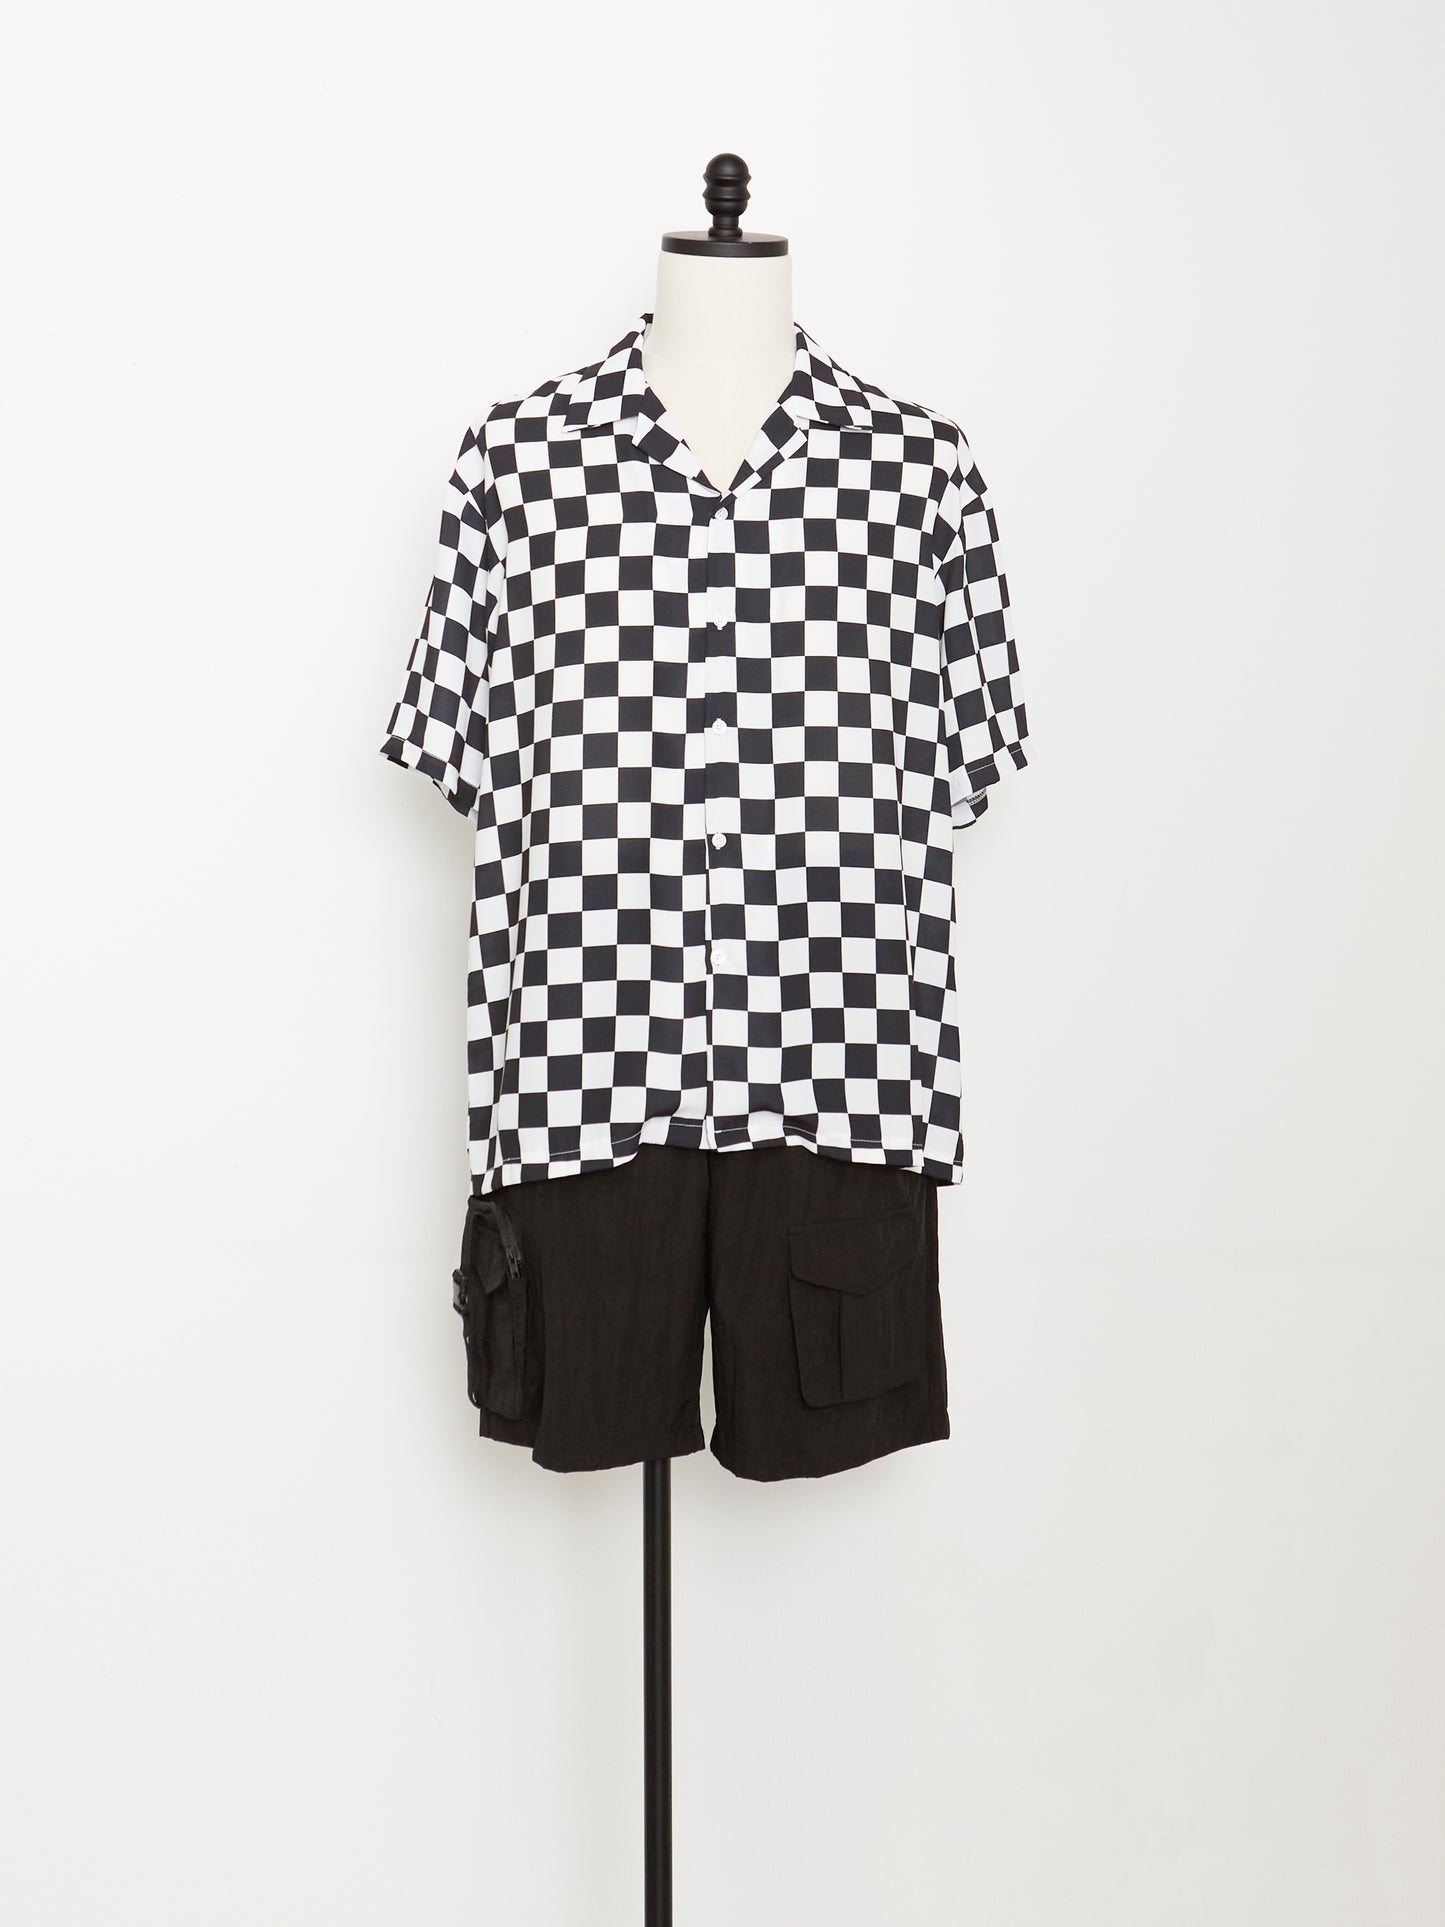 The Checkerboard Shirt